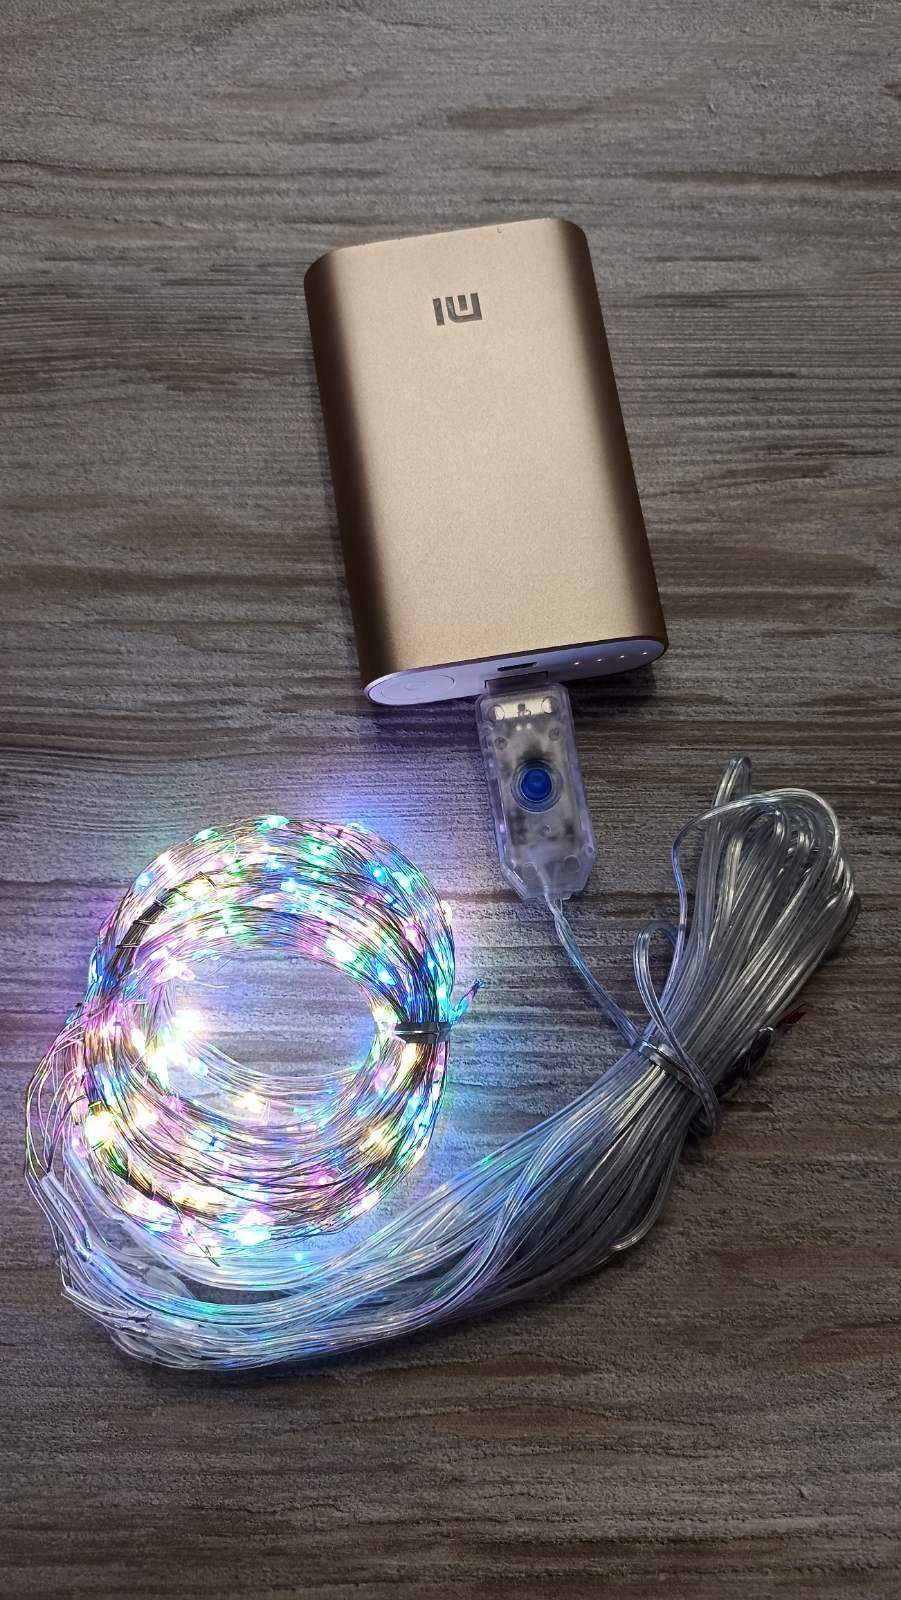 Гирлянда штора с пультом, USB 3 * 3 м, 300 LED,  разноцветная, новая